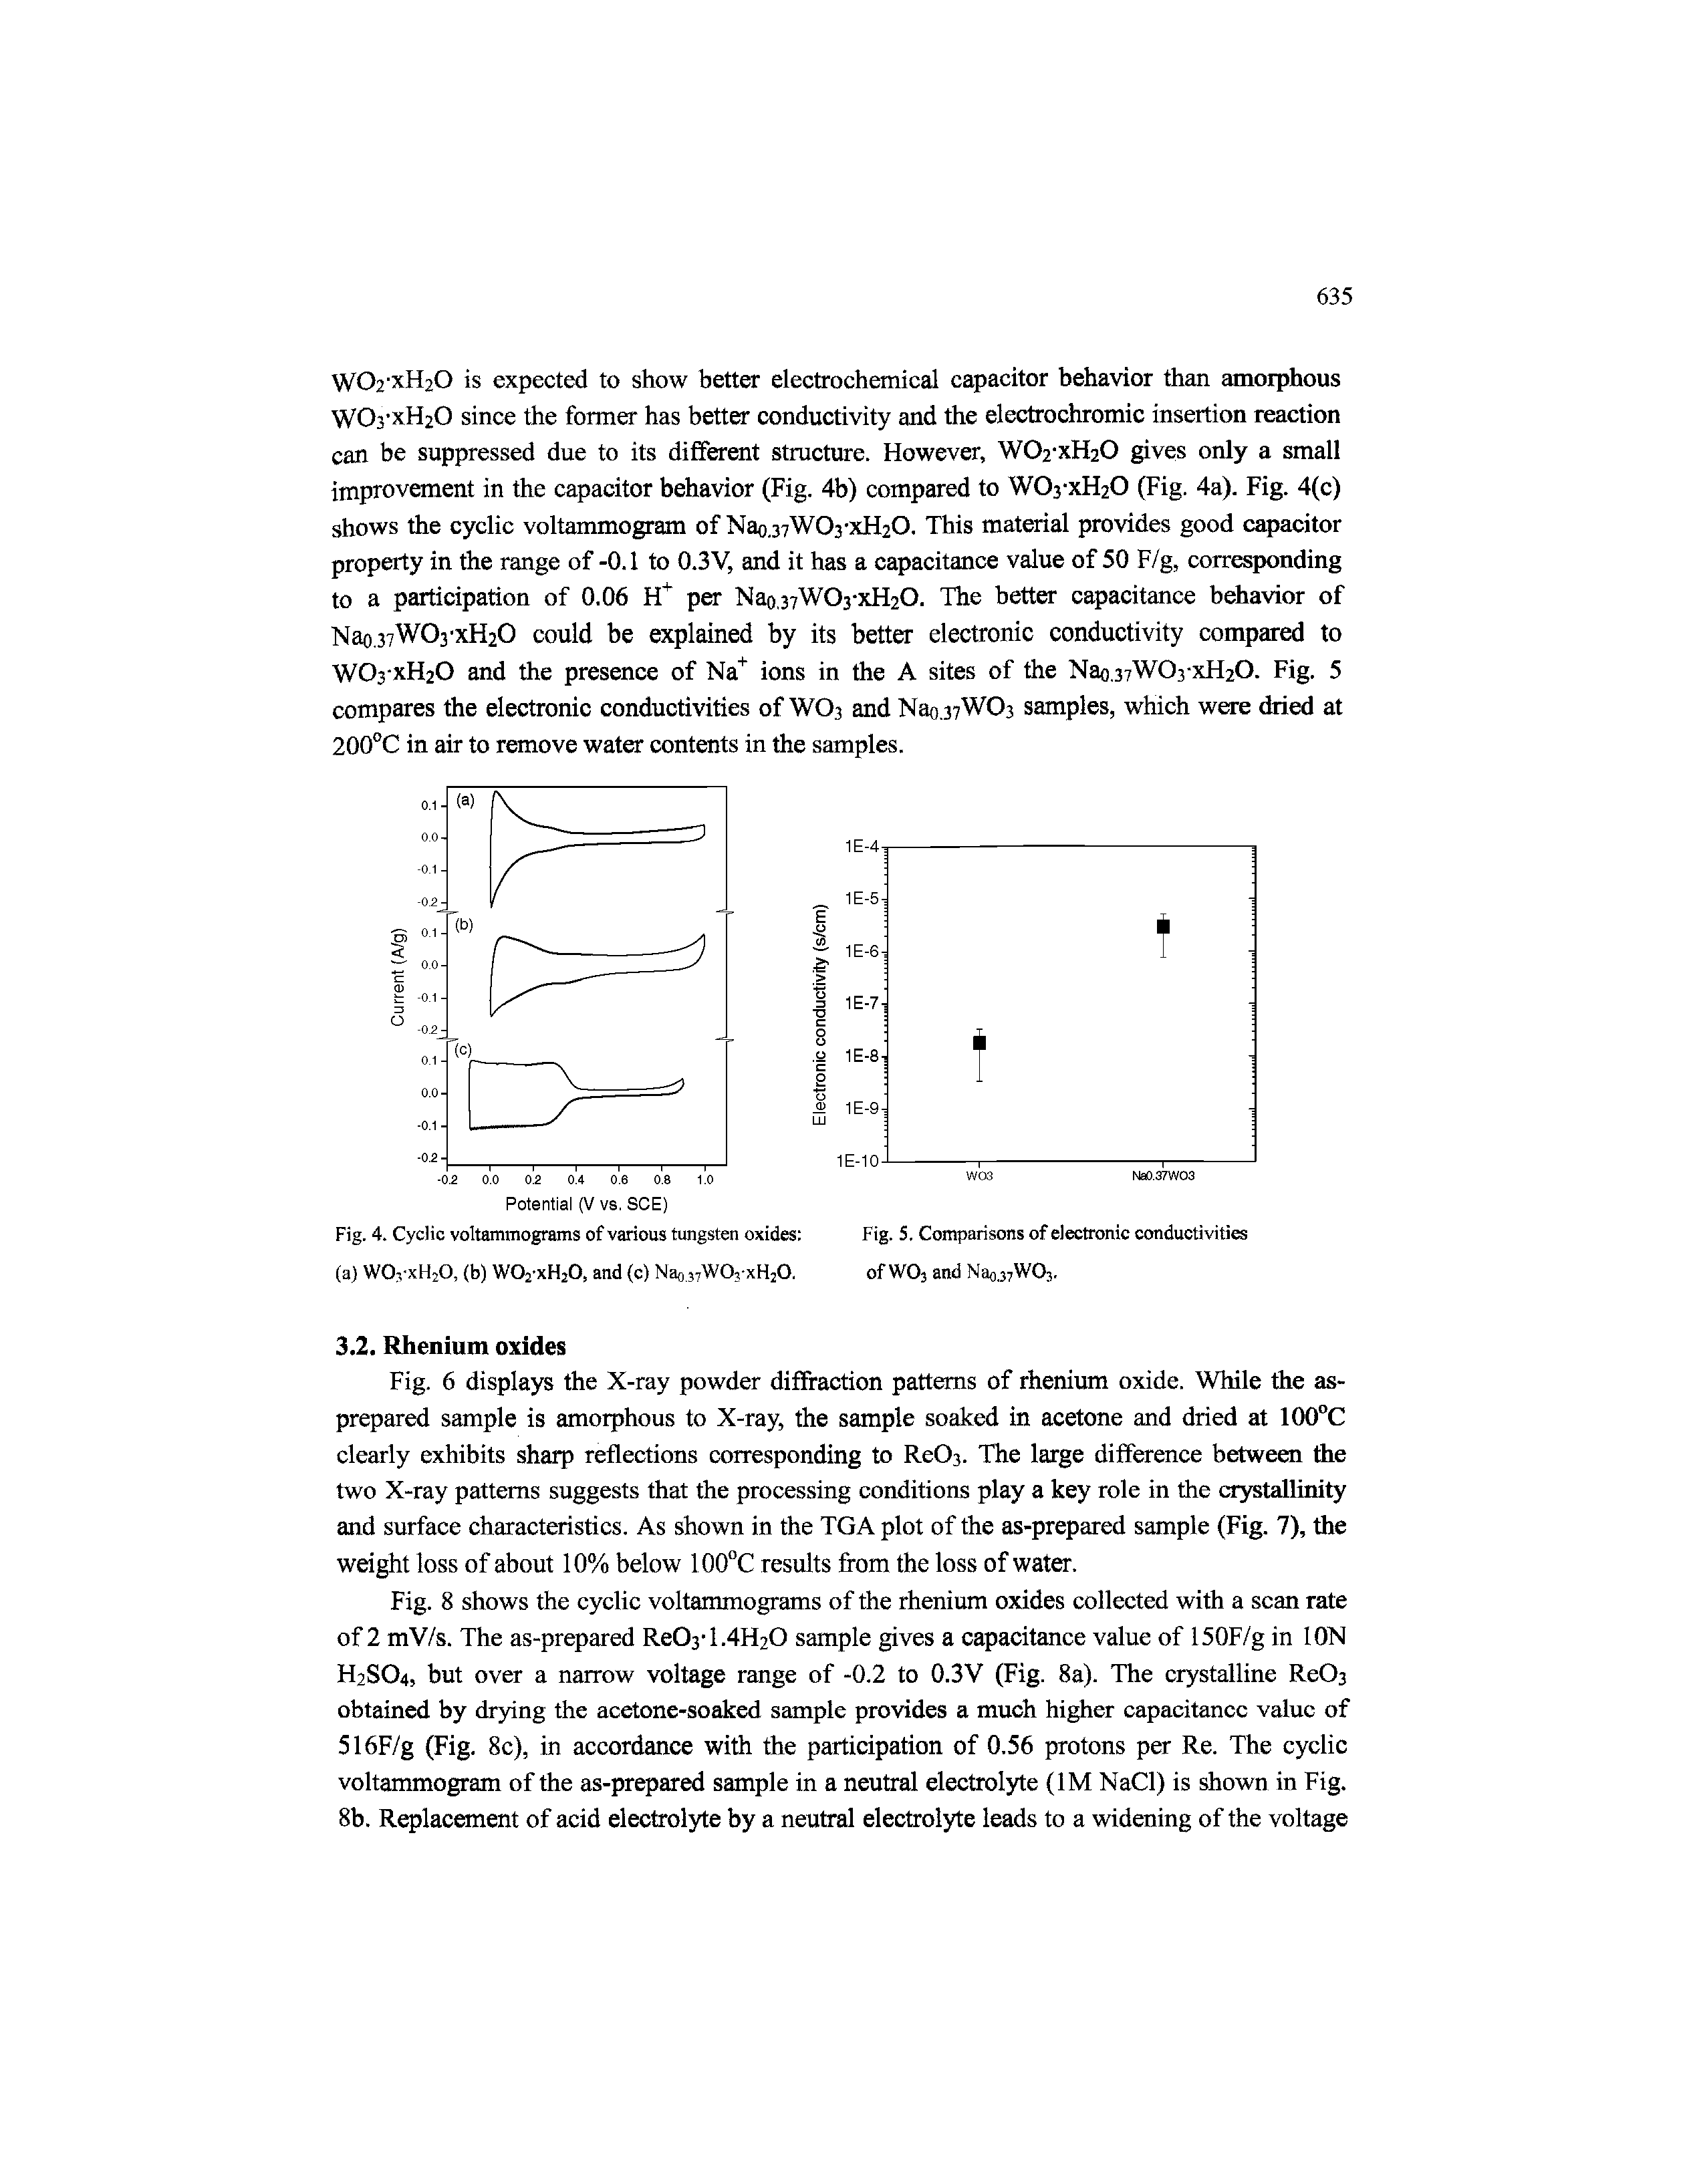 Fig. 4. Cyclic voltammograms of various tungsten oxides (a) WOyxHjO, (b) WOj-xHjO, and (c) Nao. WOyxHjO.